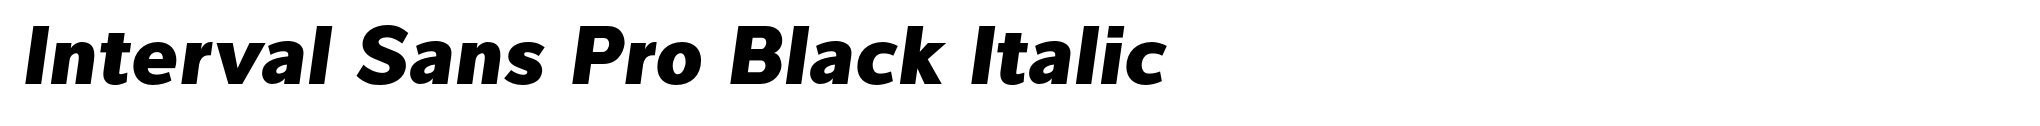 Interval Sans Pro Black Italic image